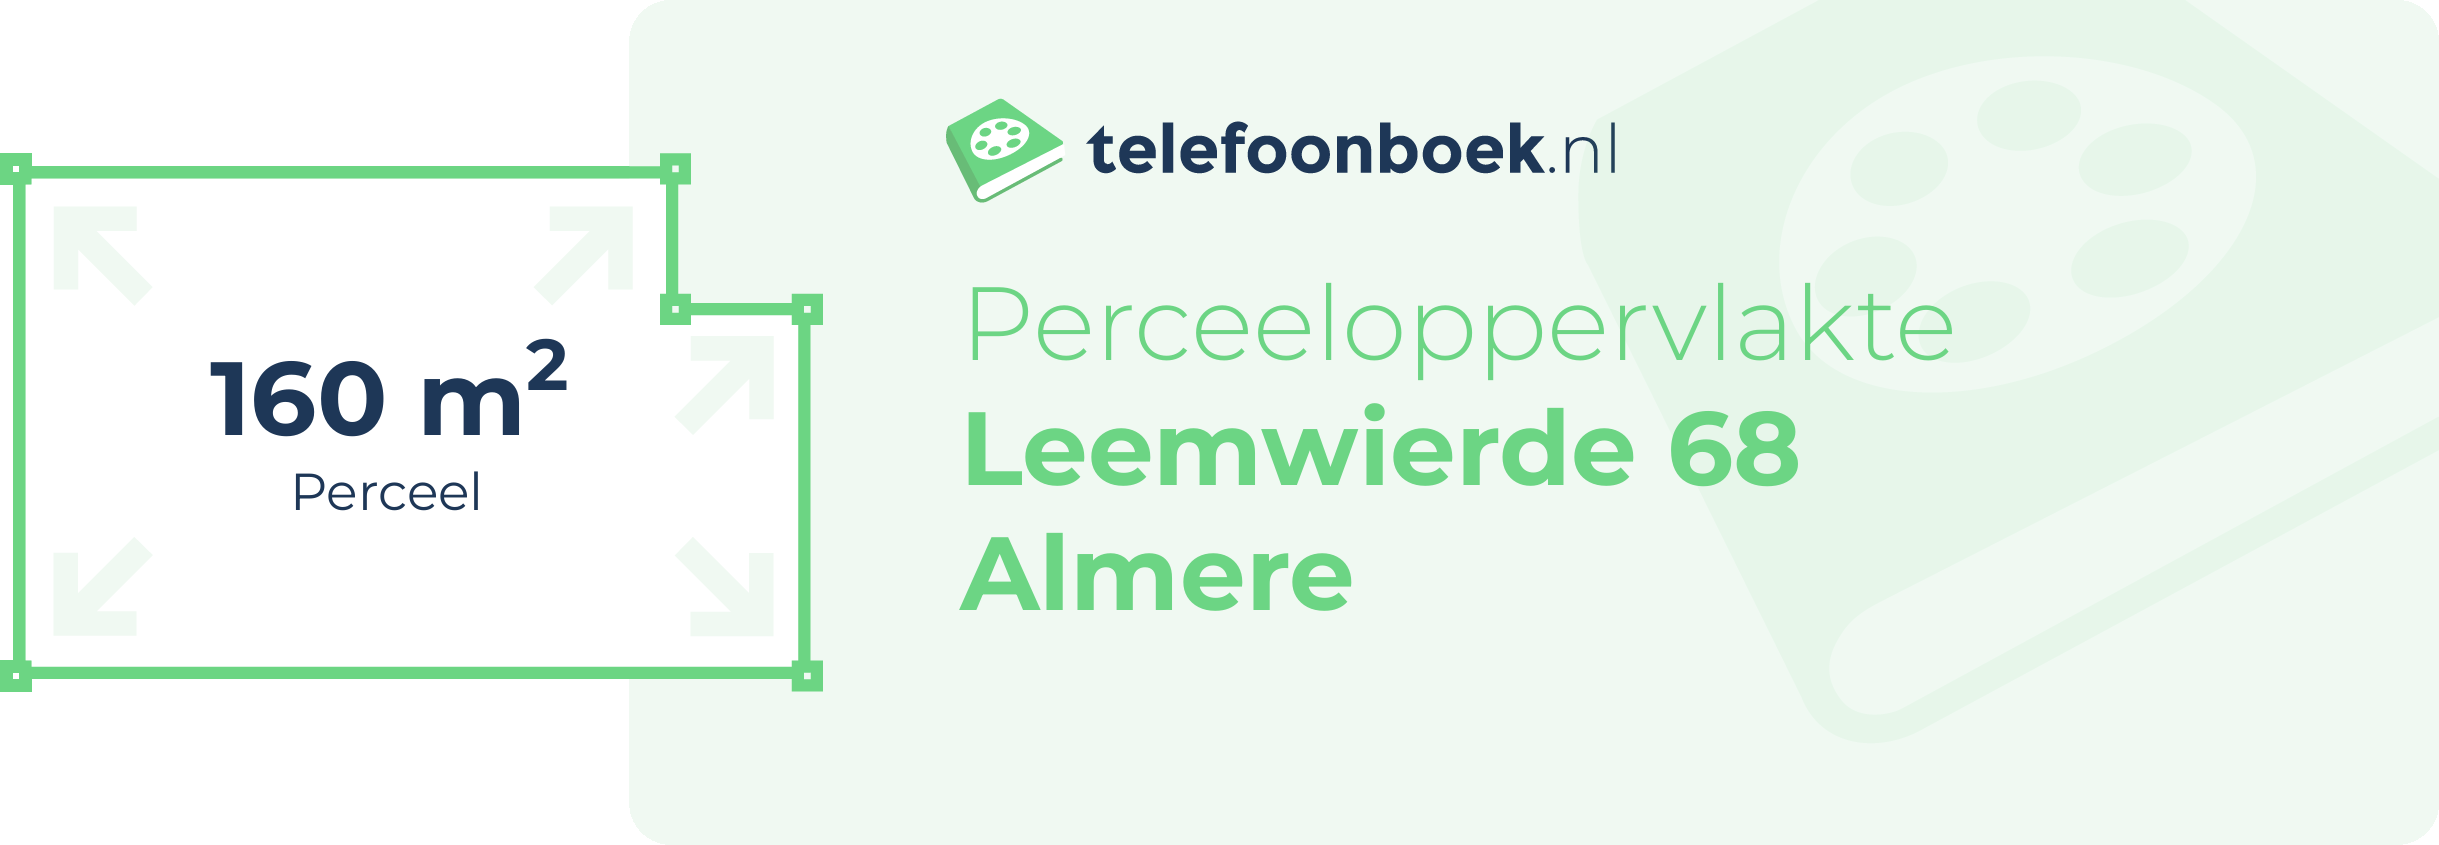 Perceeloppervlakte Leemwierde 68 Almere